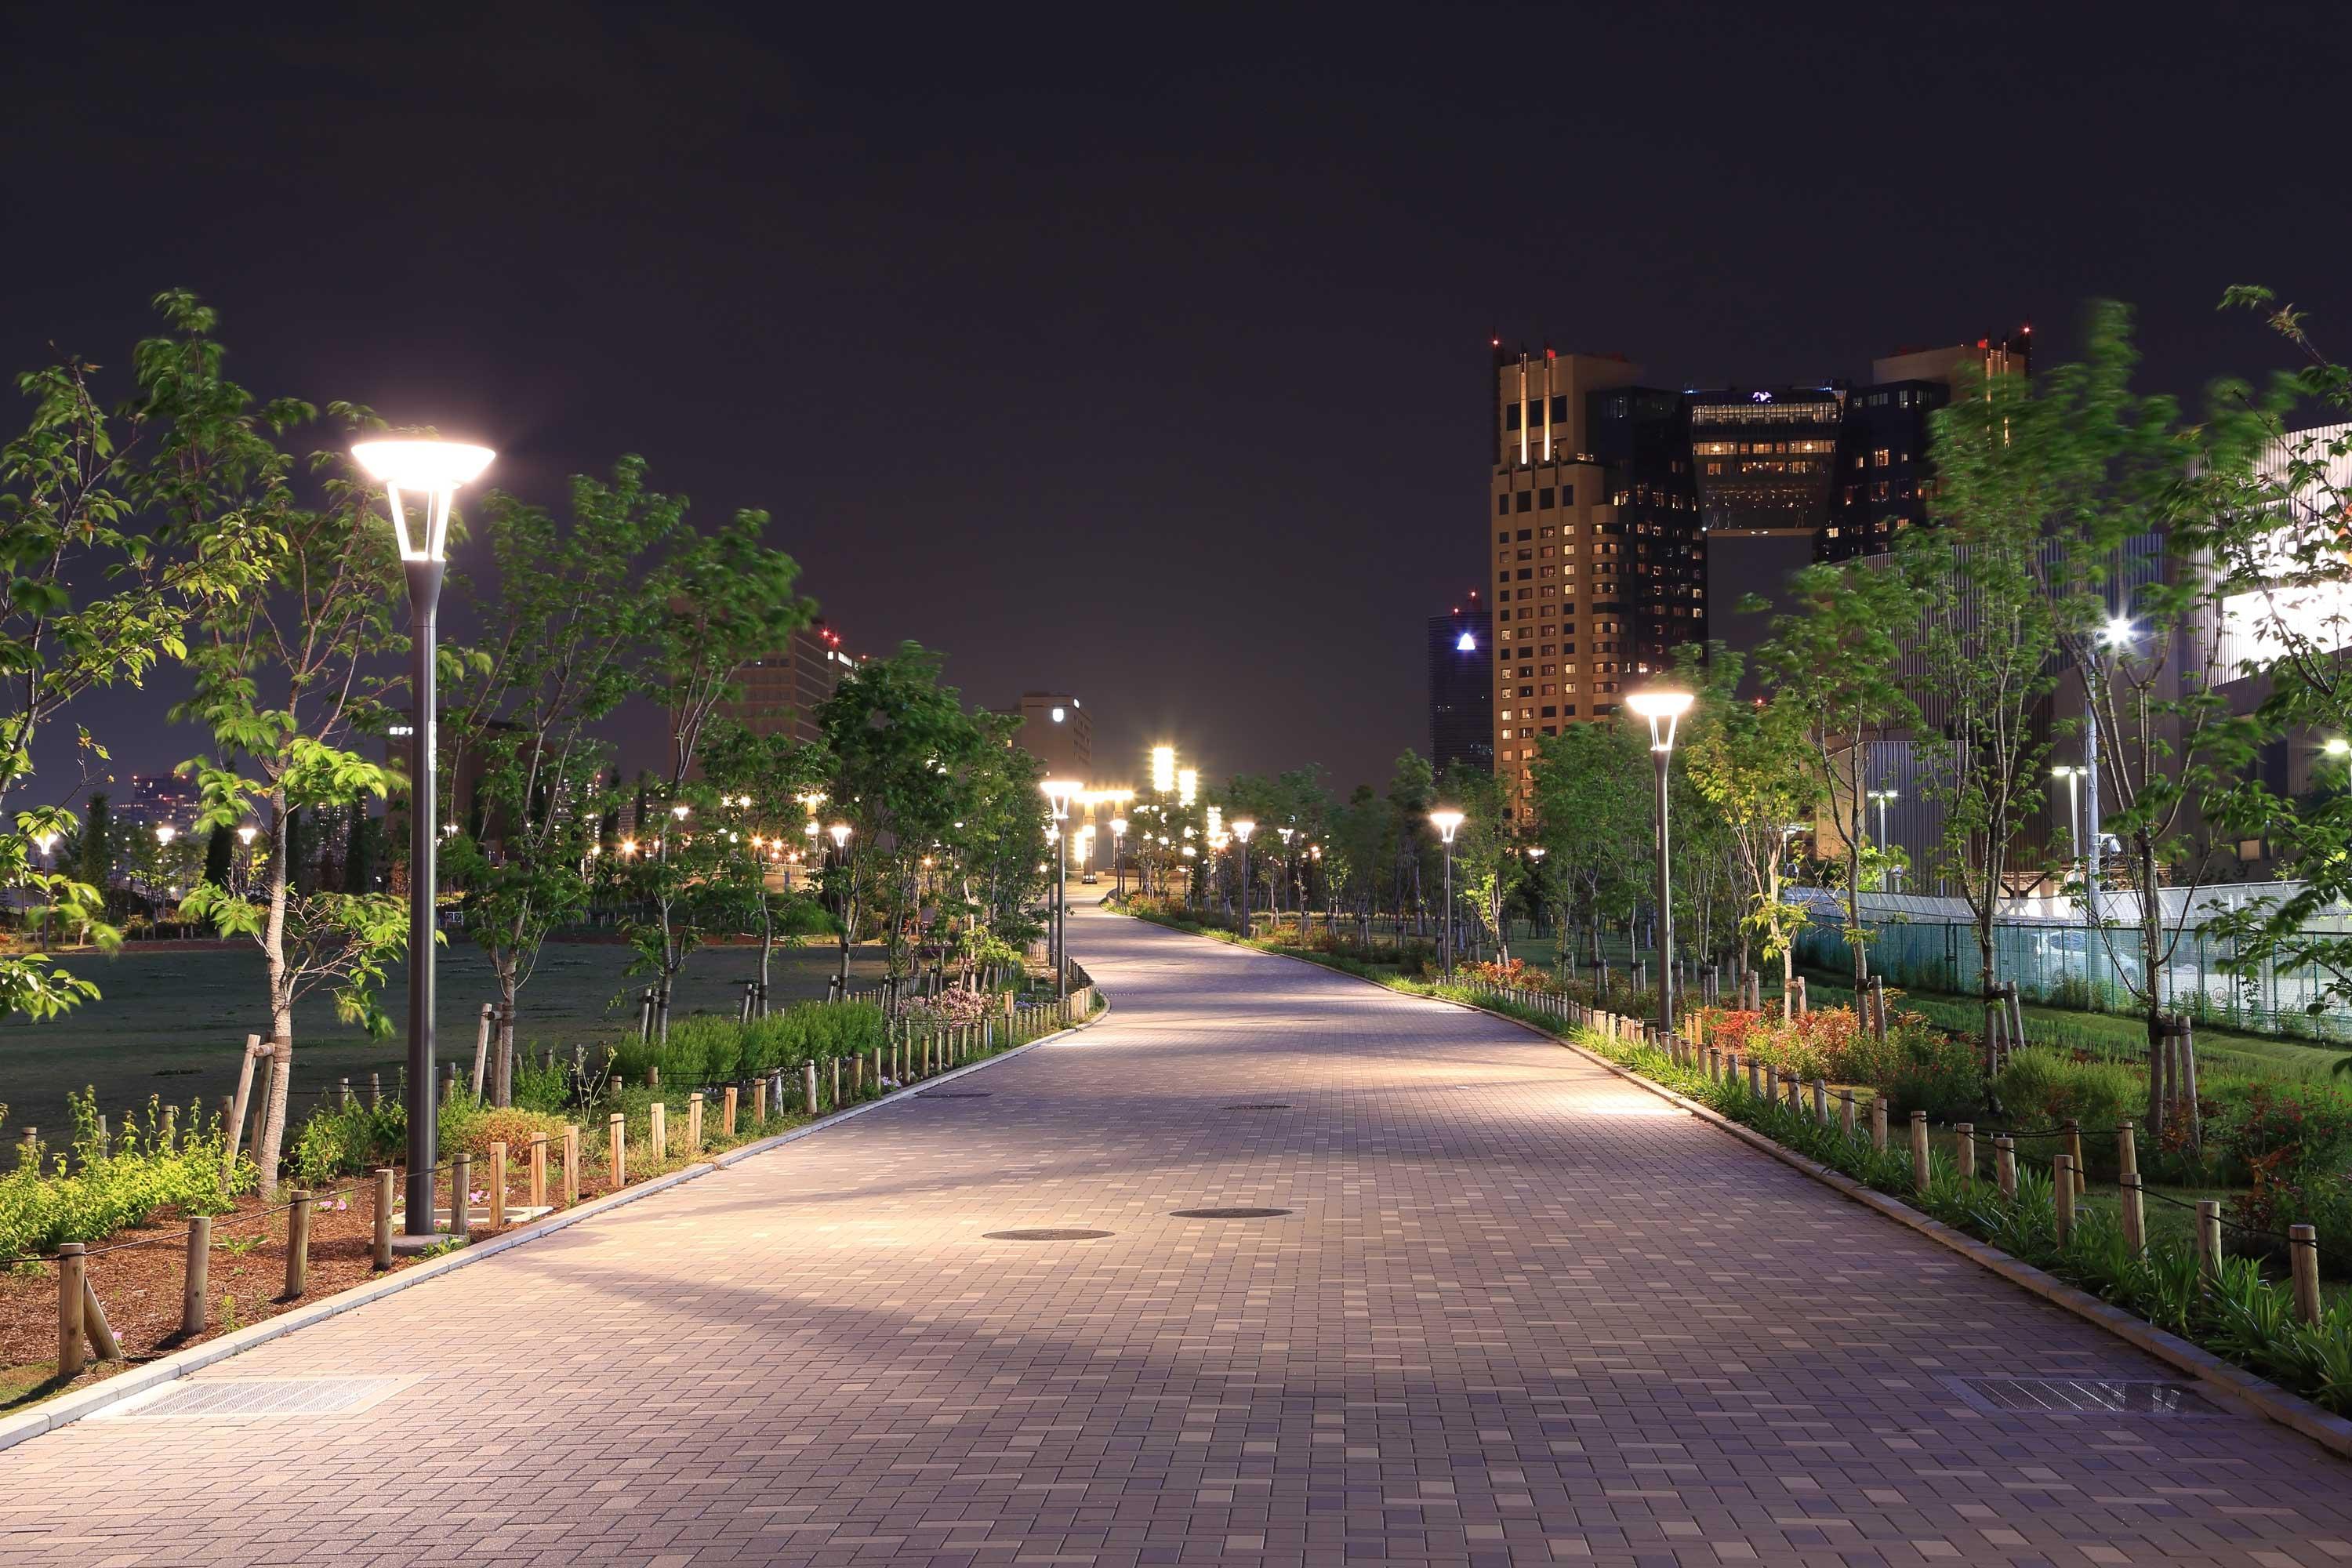 City park path at night, lit using smart lighting solution